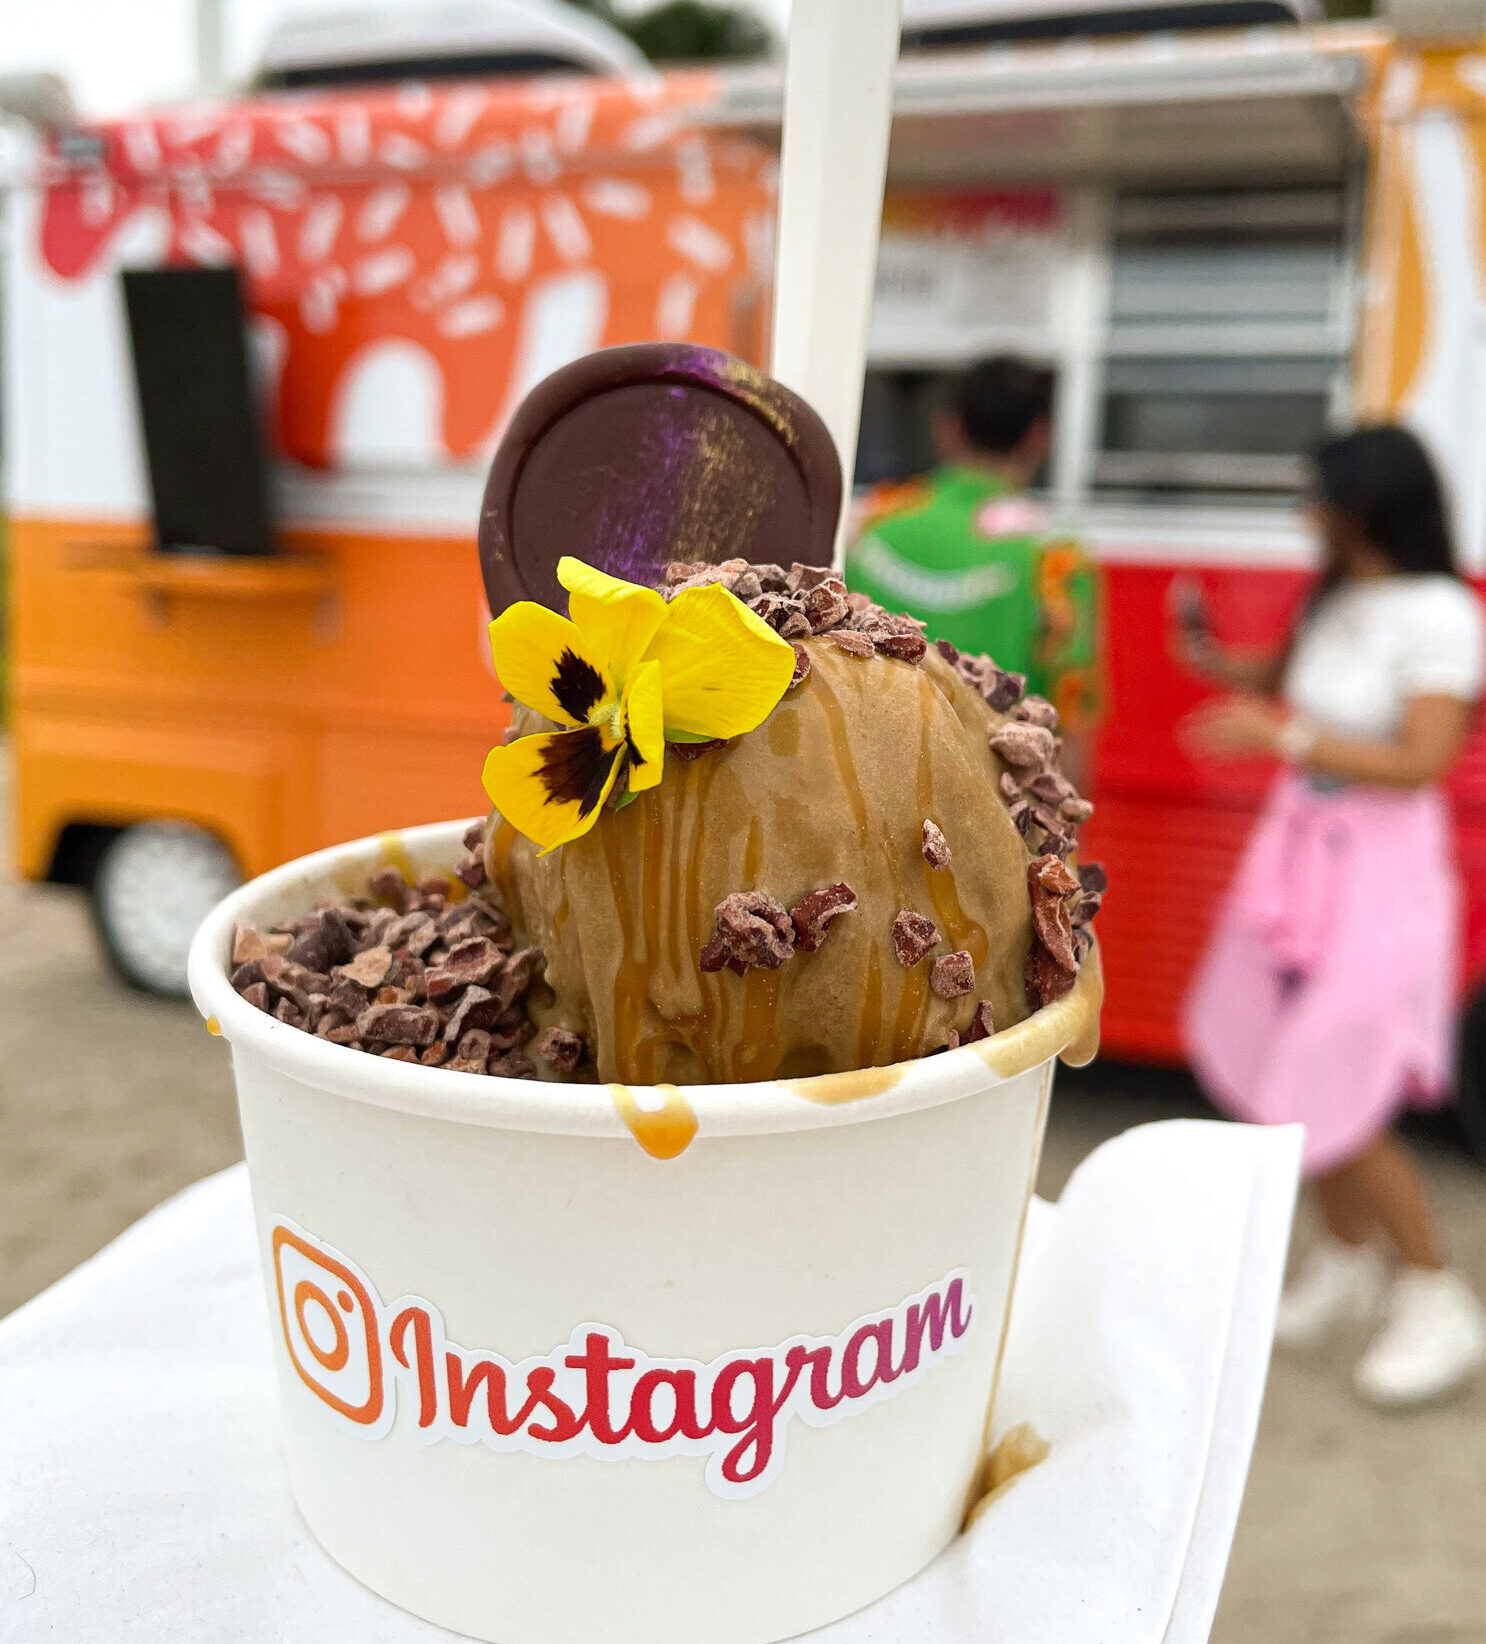 Instagram Complimentary Ice Cream Miami Beach